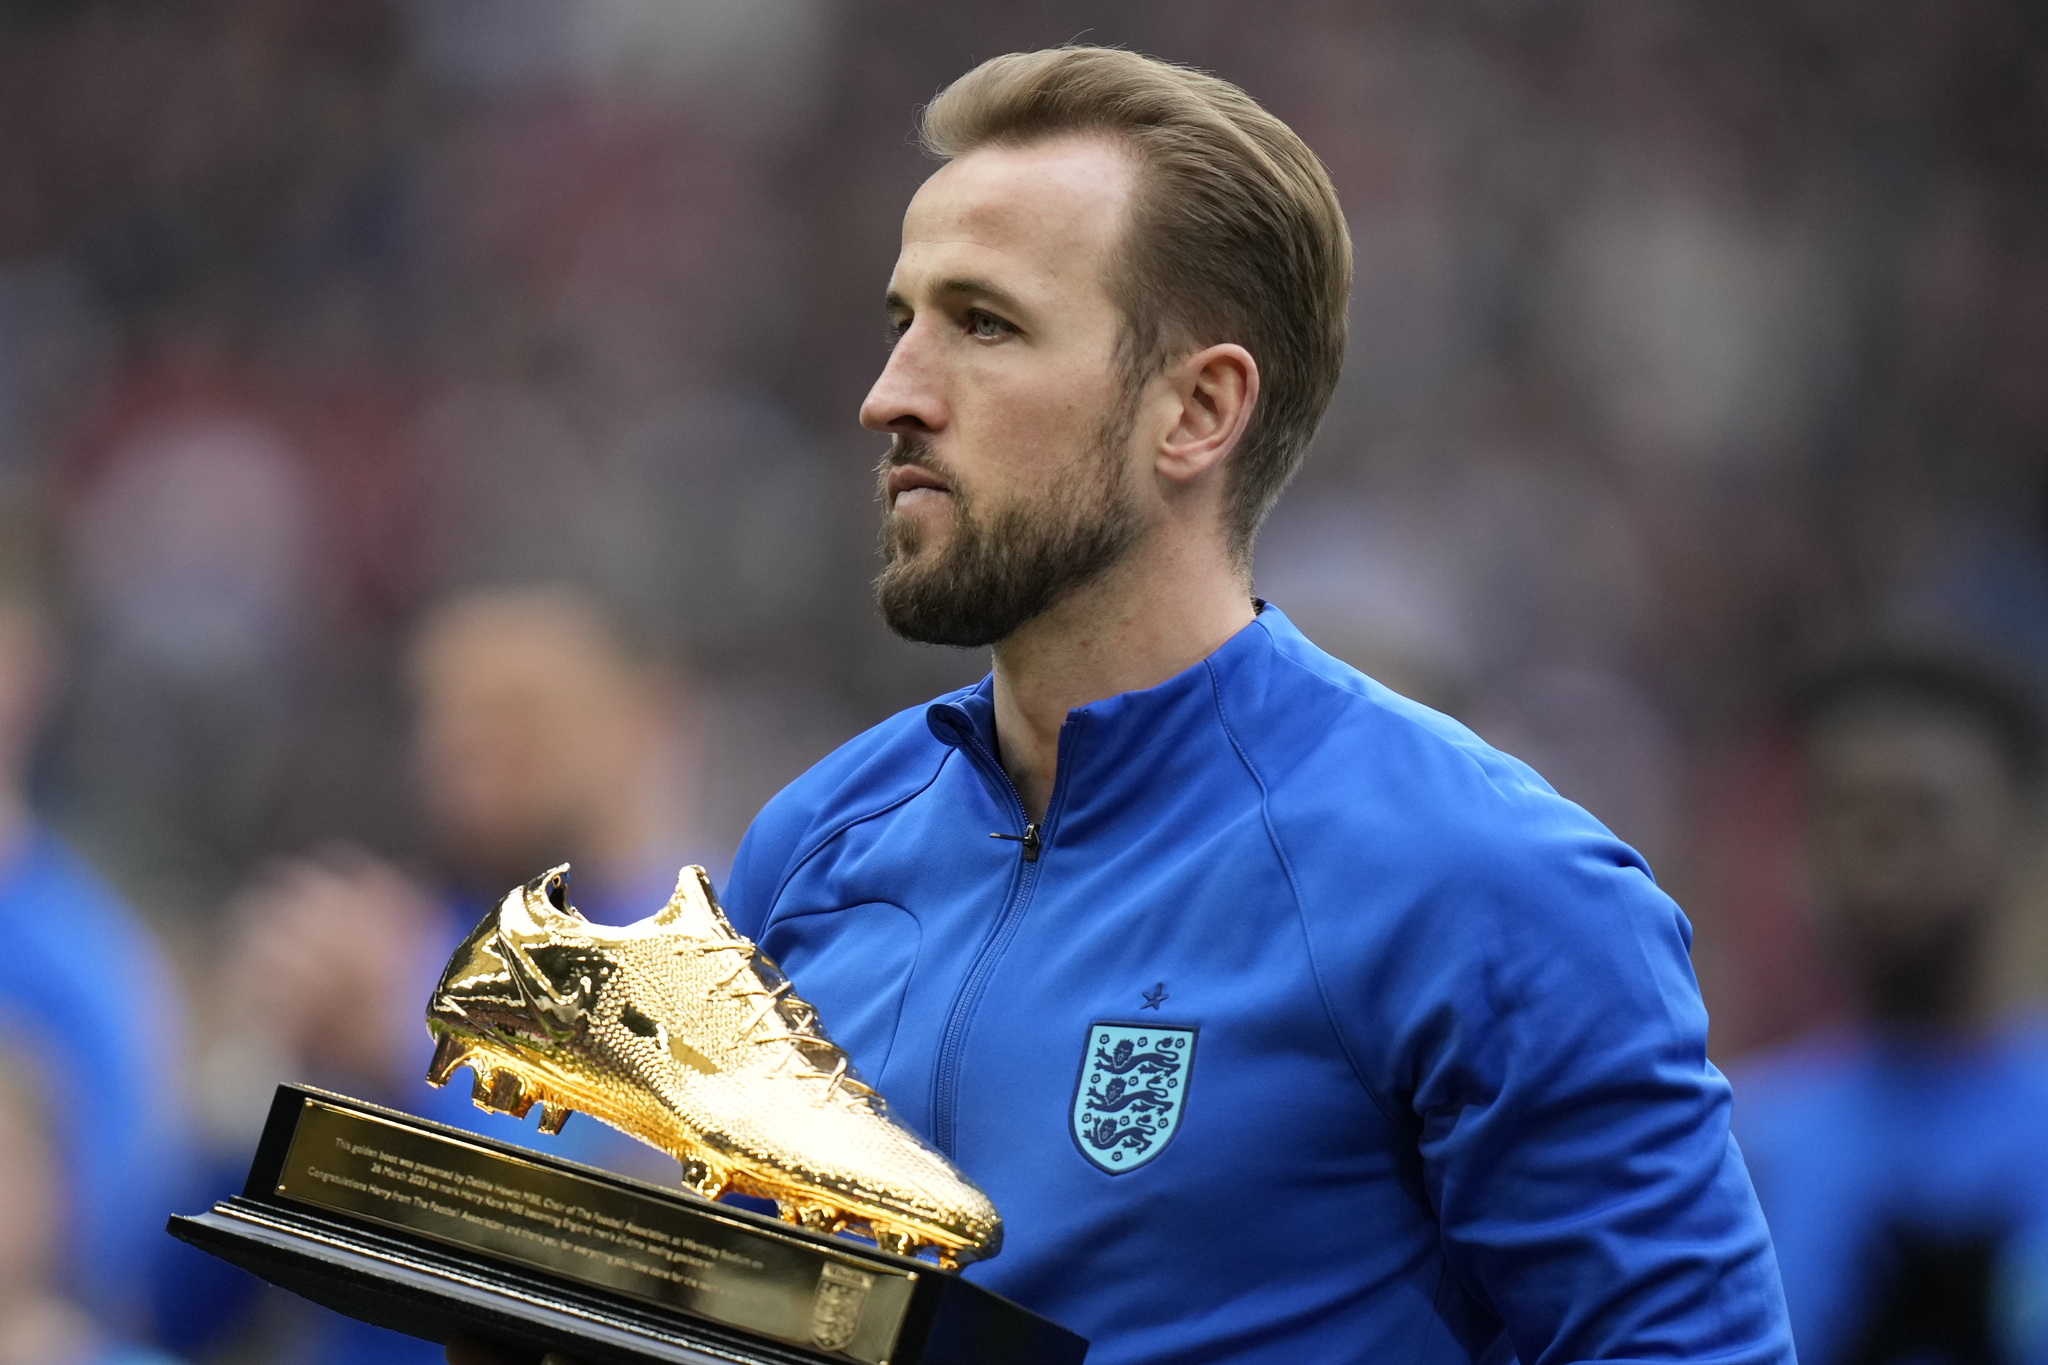 Kane receives the award for top scorer for the England team.